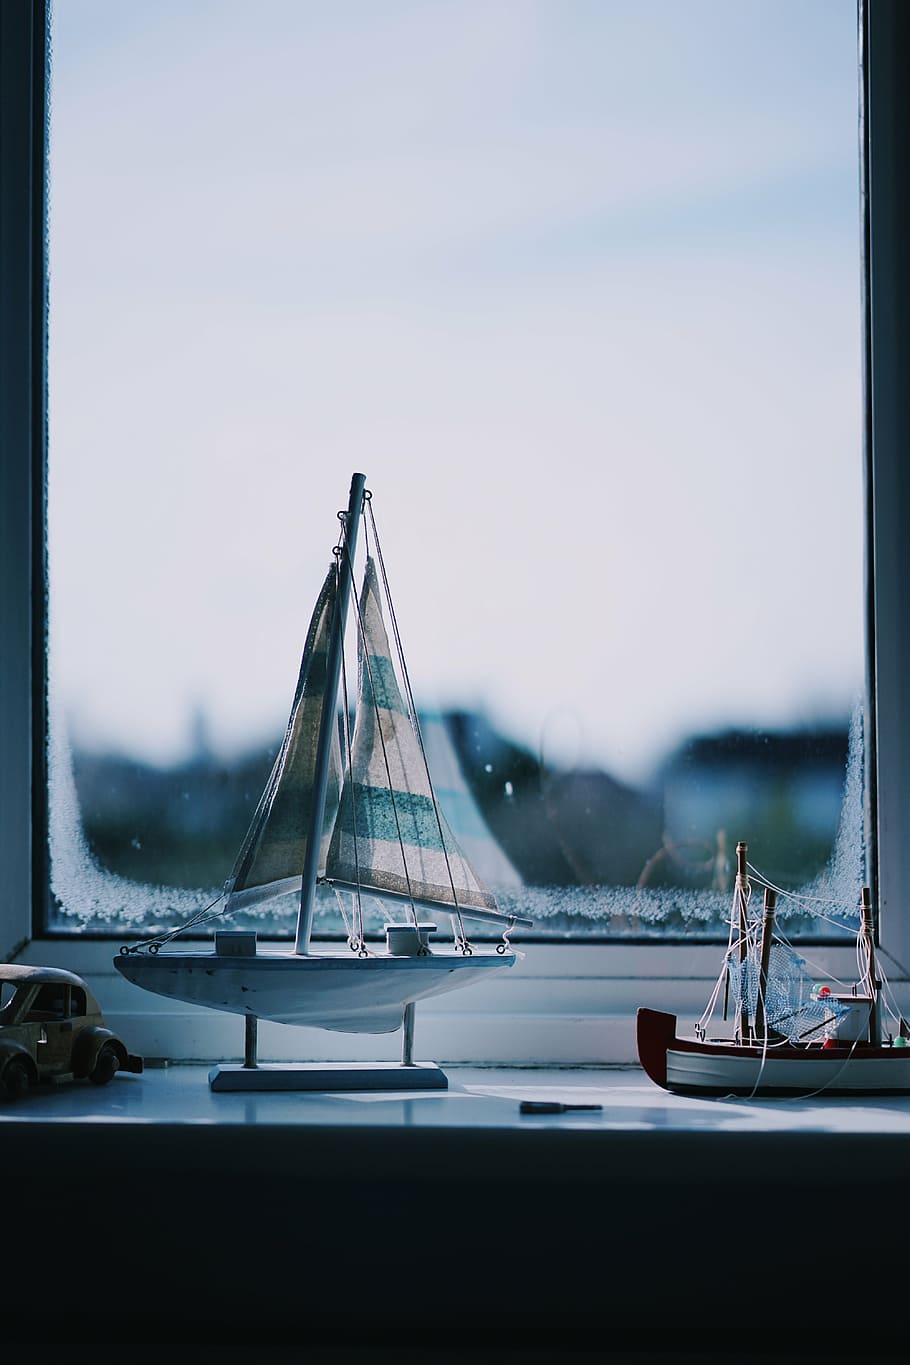 miniatura, modelo de veleiro, janela, dois, branco, vela, navios, miniaturas, ao lado, vidro